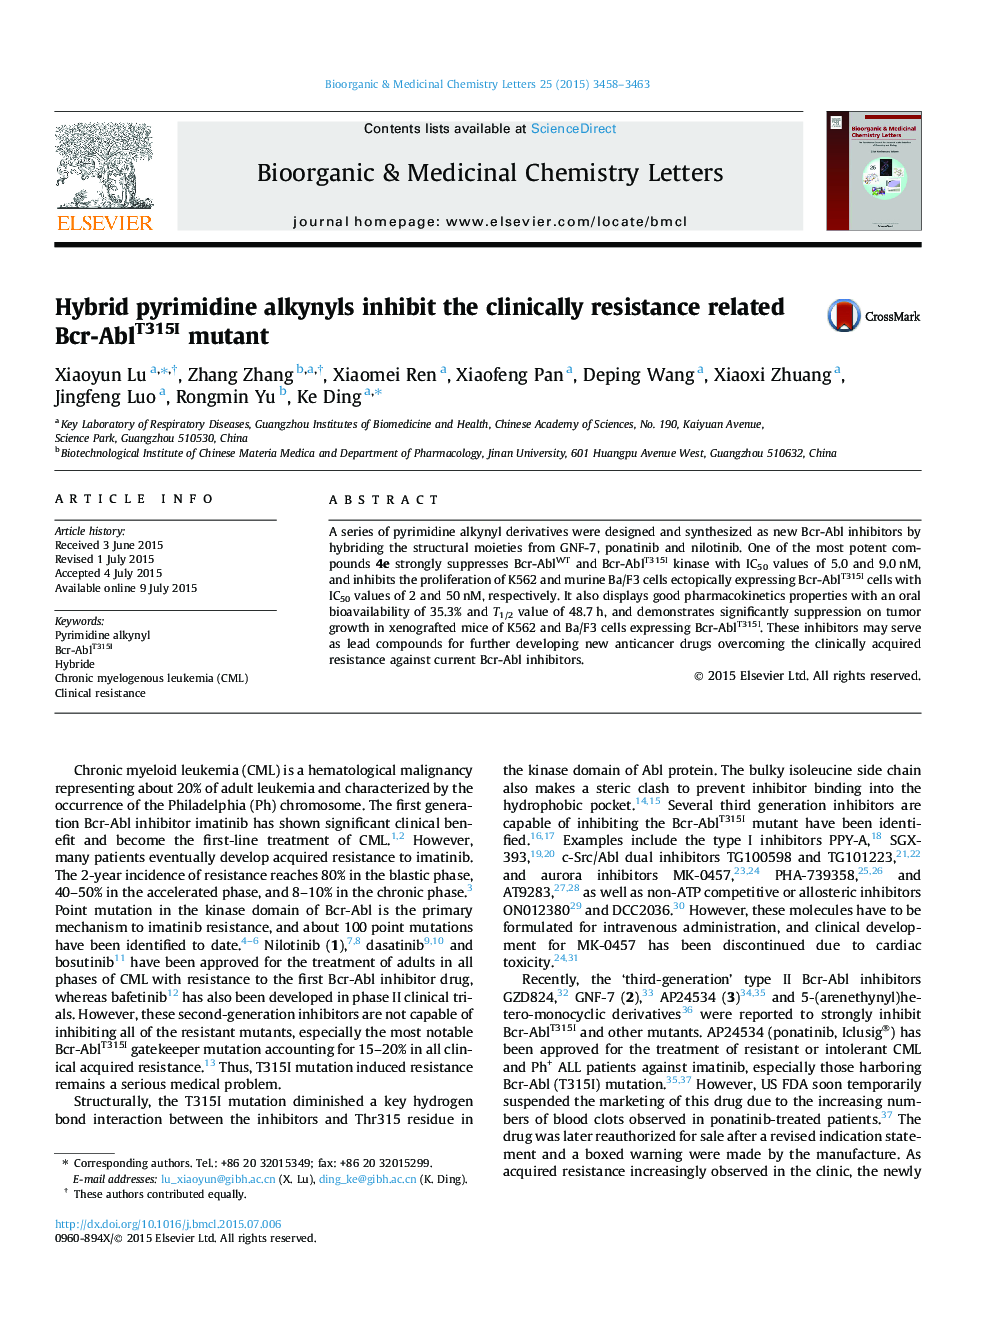 Hybrid pyrimidine alkynyls inhibit the clinically resistance related Bcr-AblT315I mutant